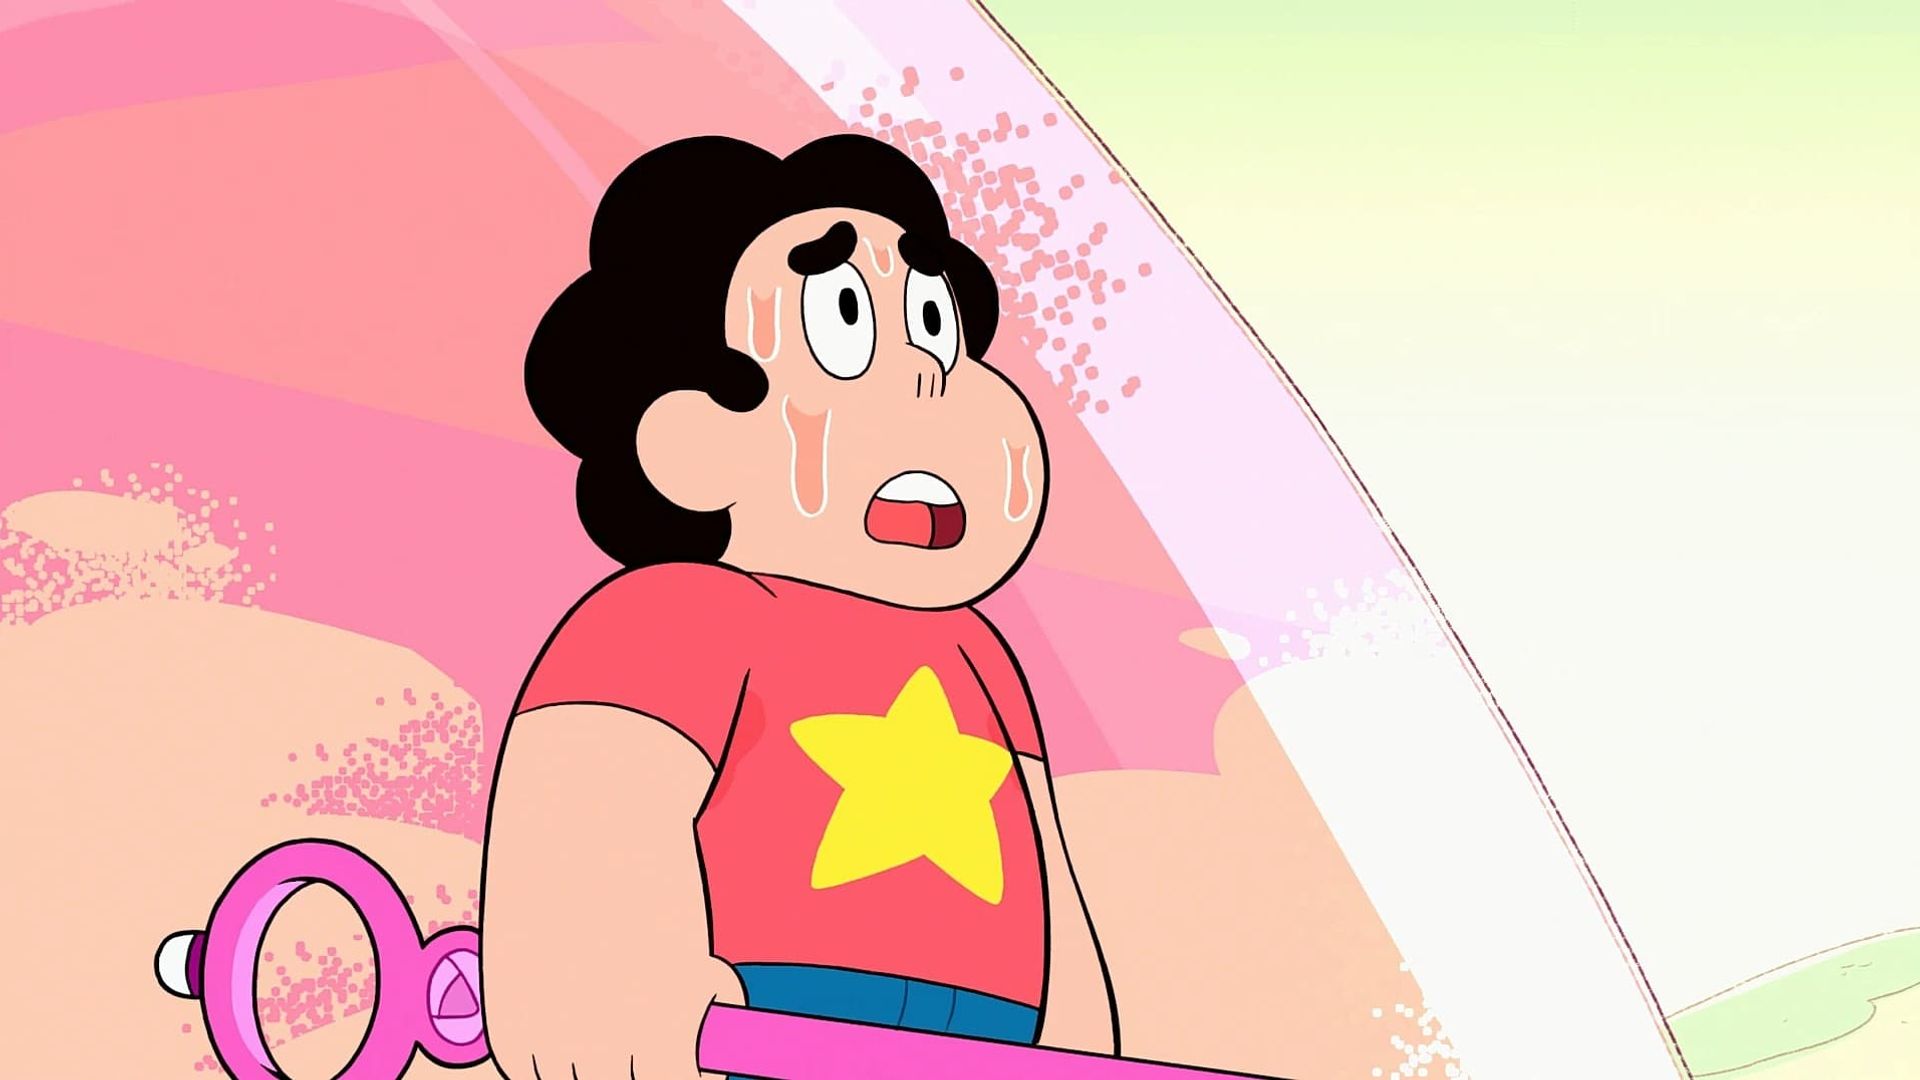 Steven Universe background